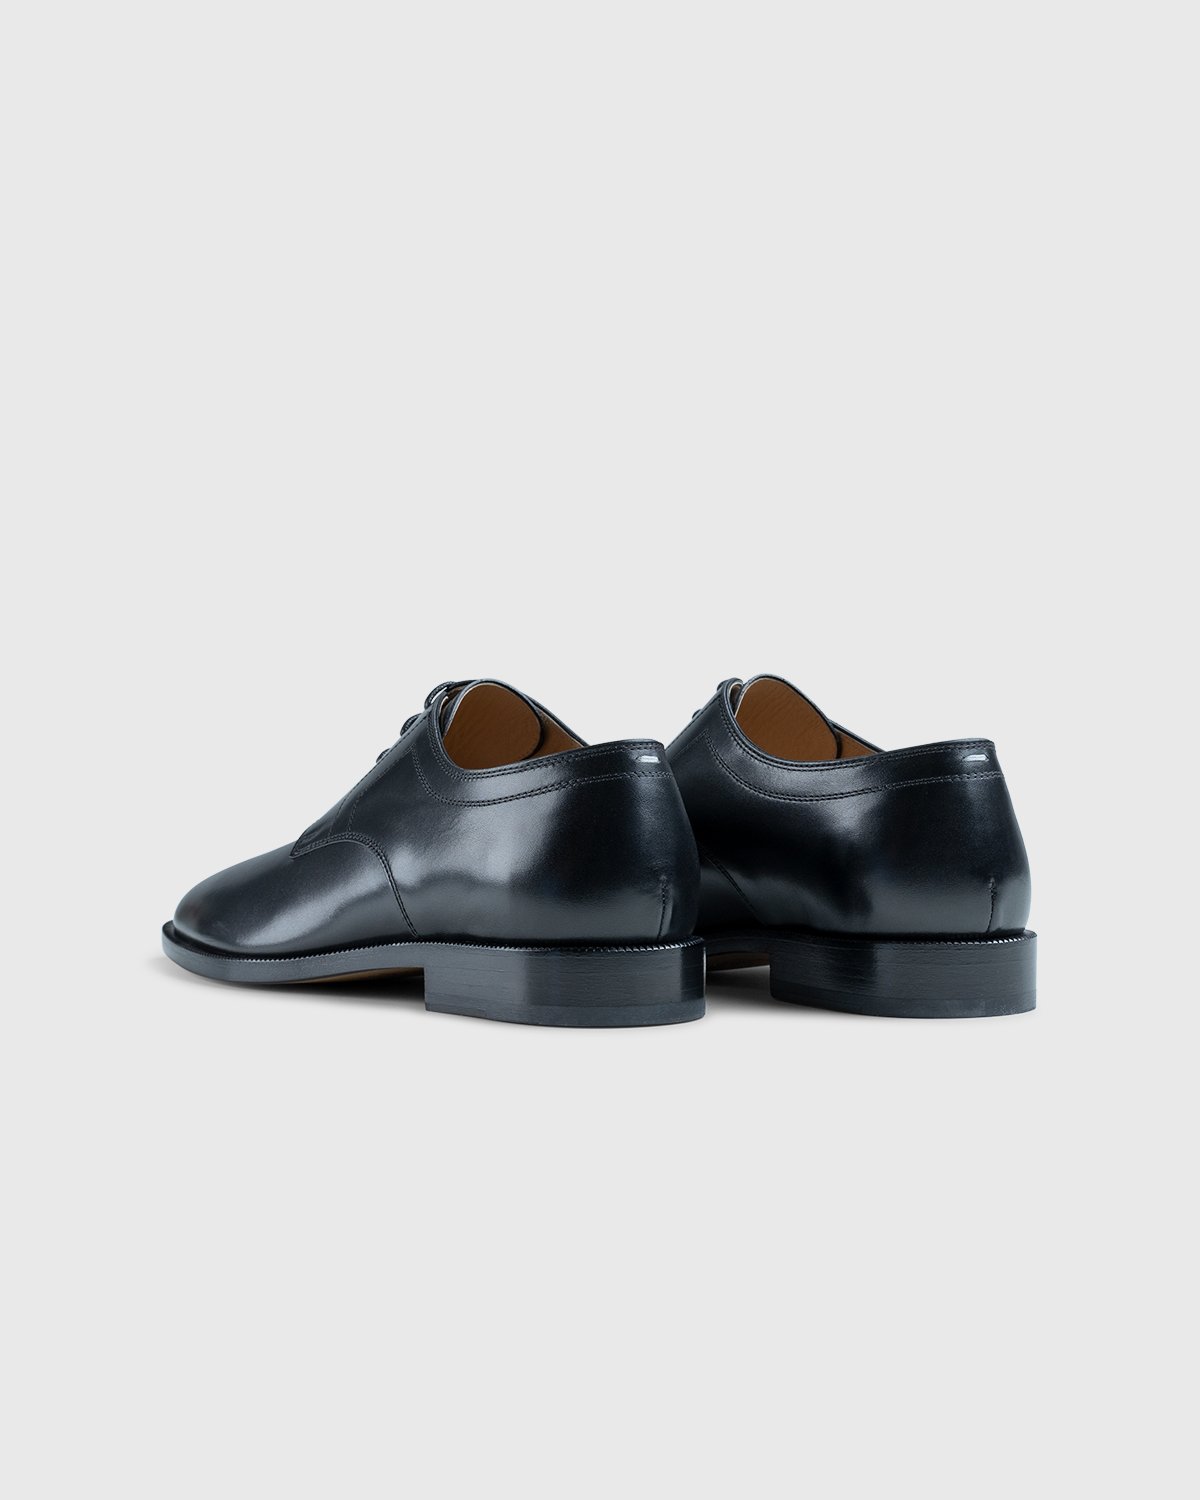 Maison Margiela - Tabi Lace-up Shoes Black - Footwear - Black - Image 3